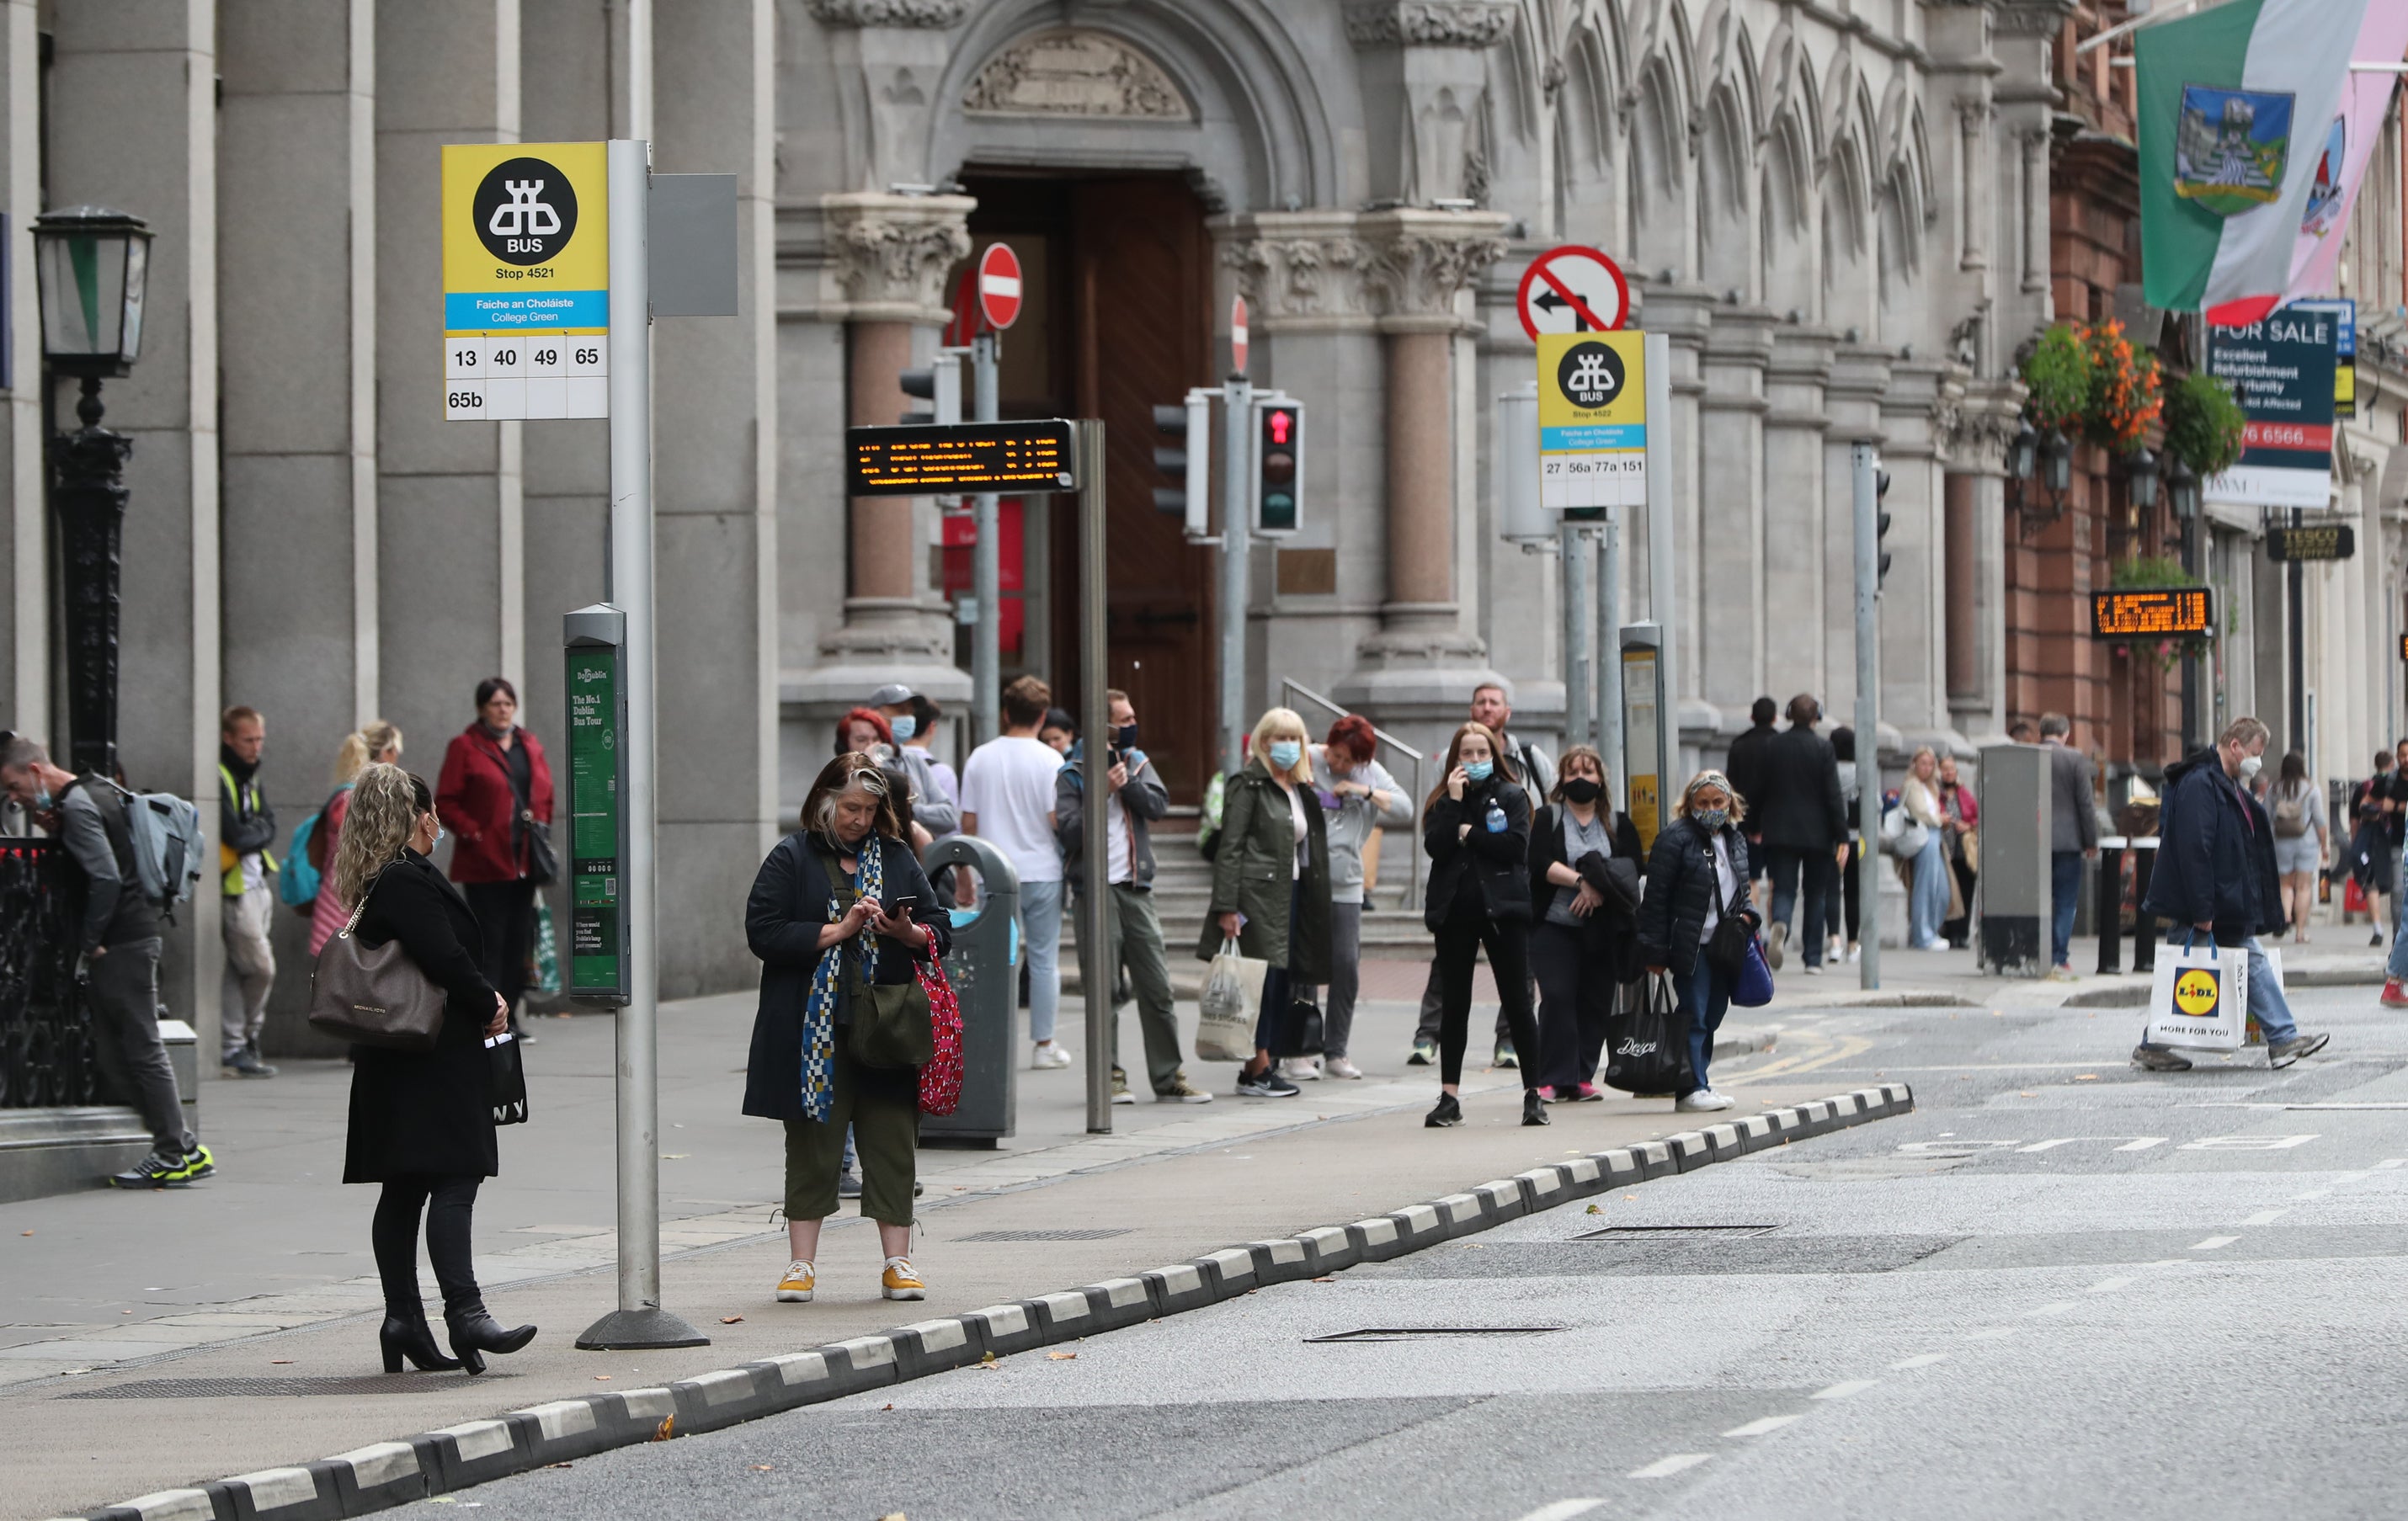 Passengers wait for a bus in Dublin city centre (PA)